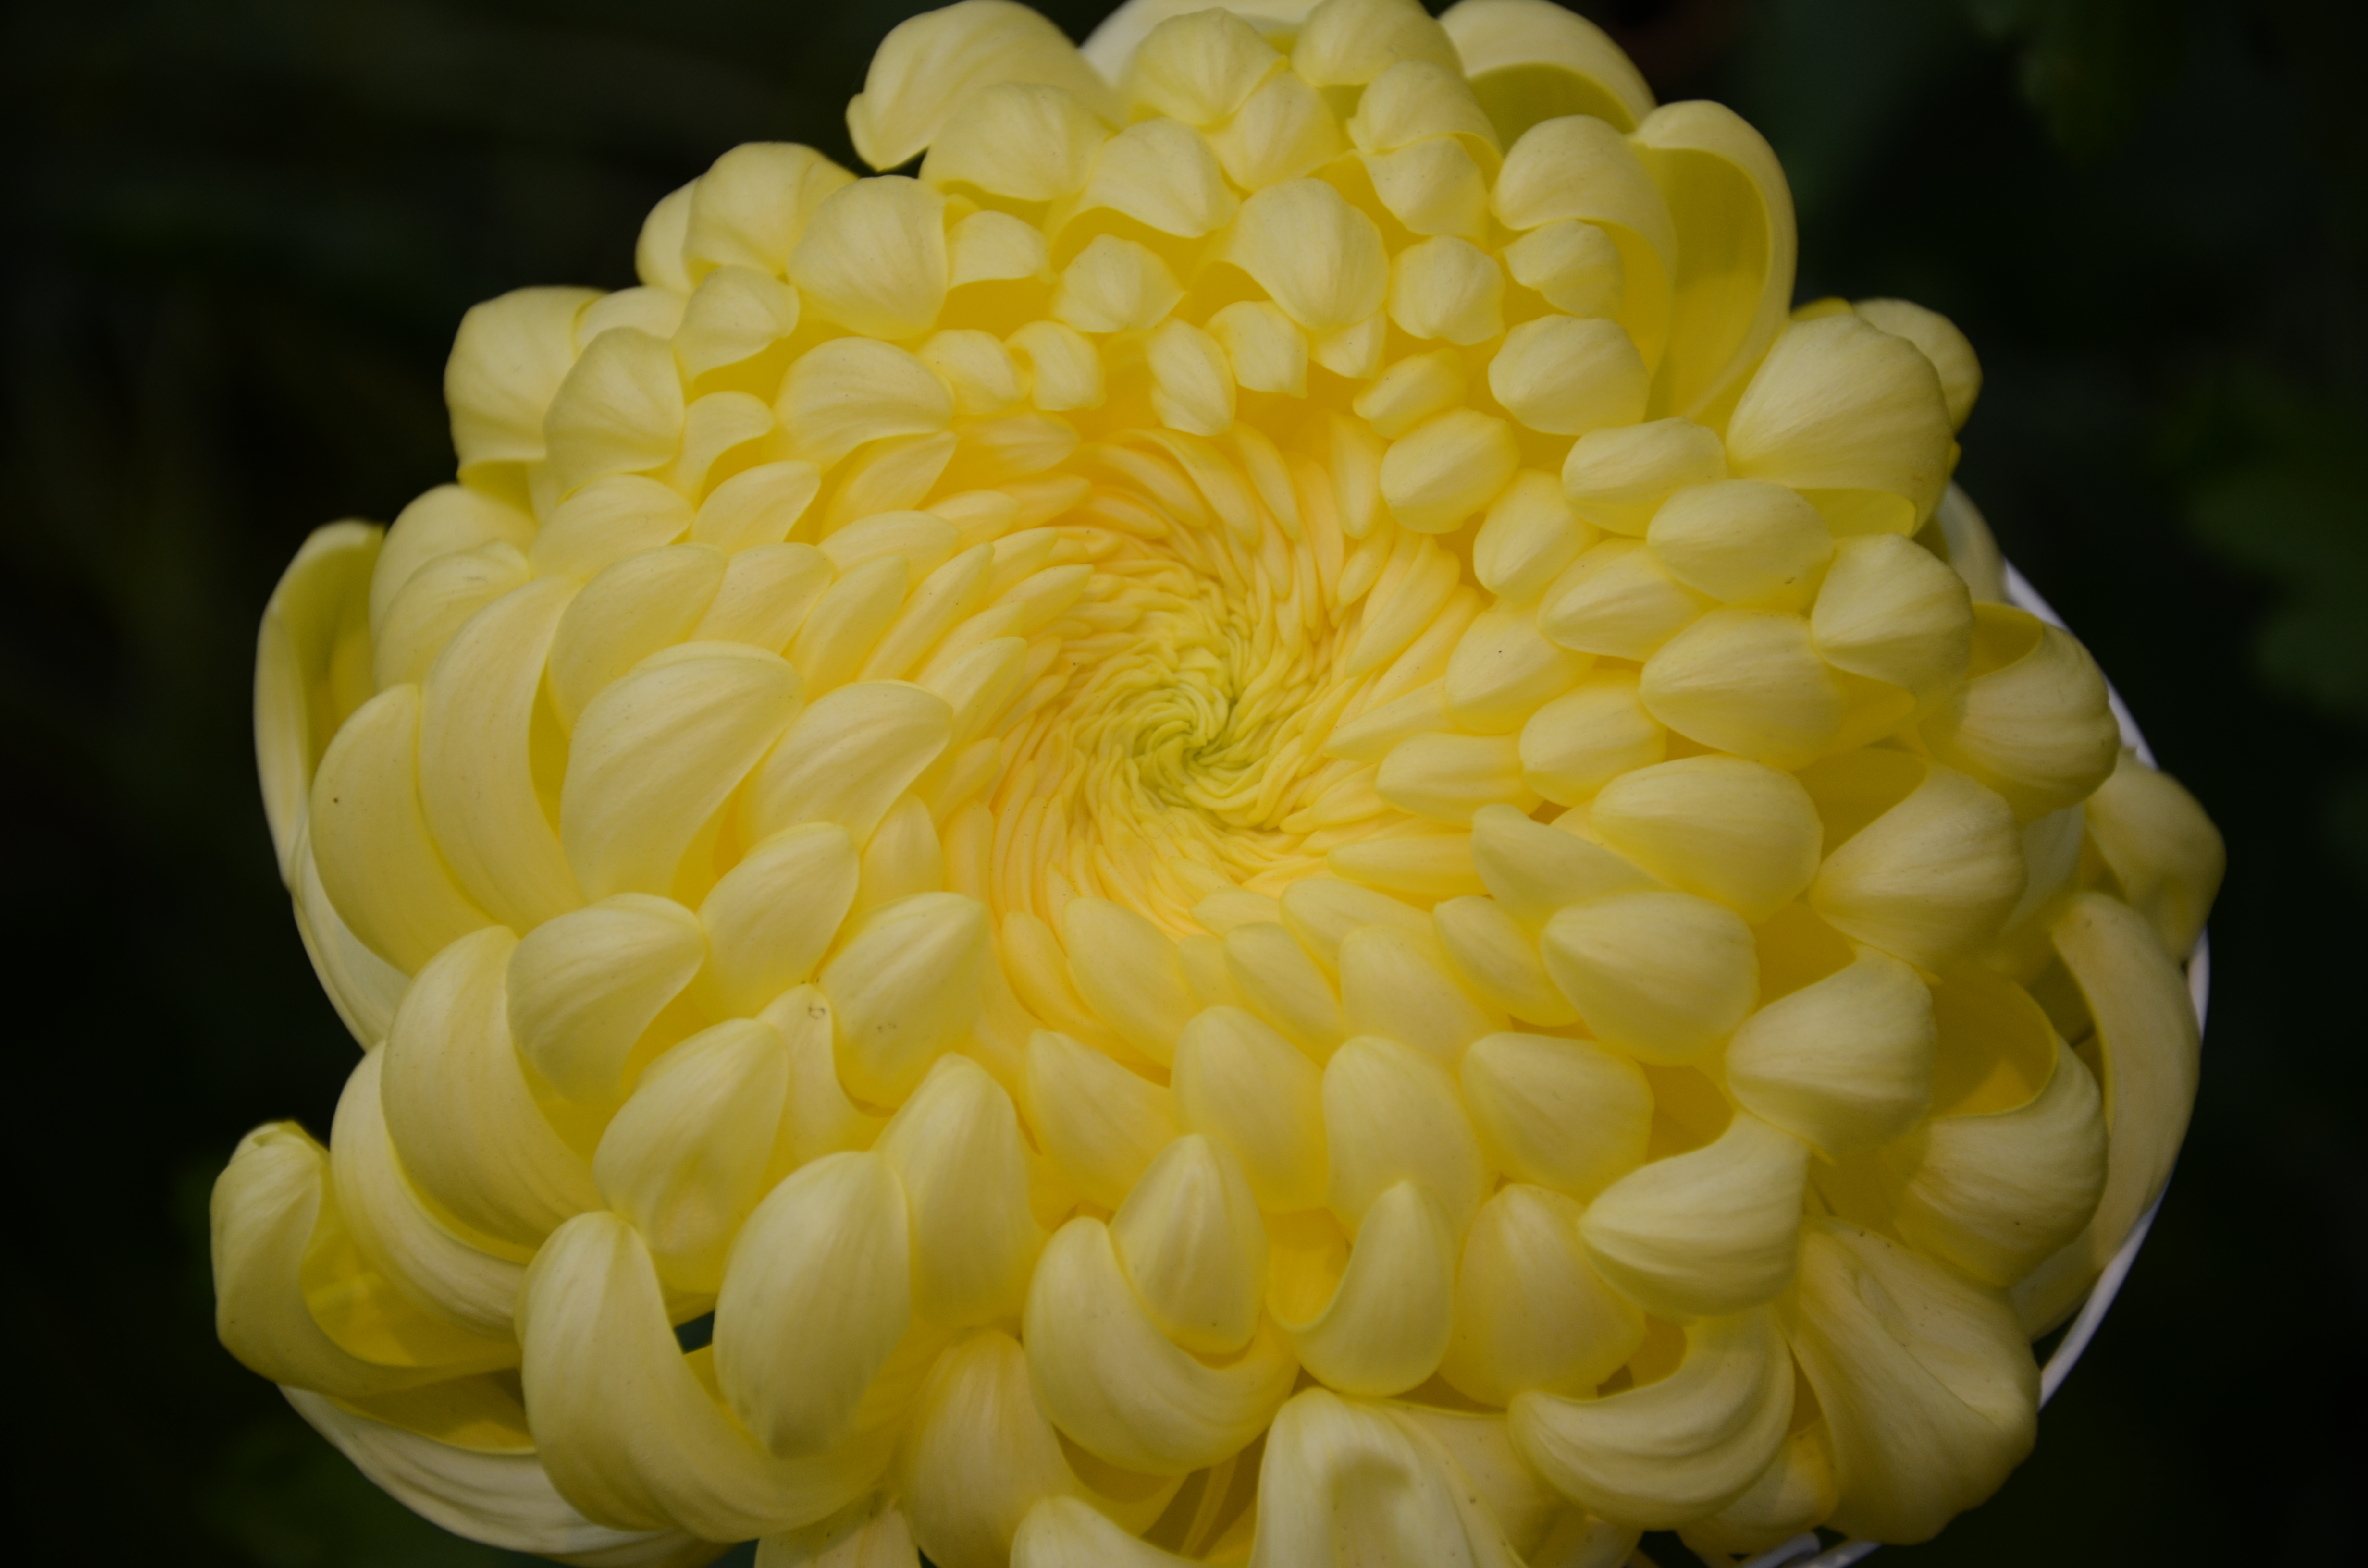 Fluffy chrysanthemum not its scientific name, NYC Botanical Garden